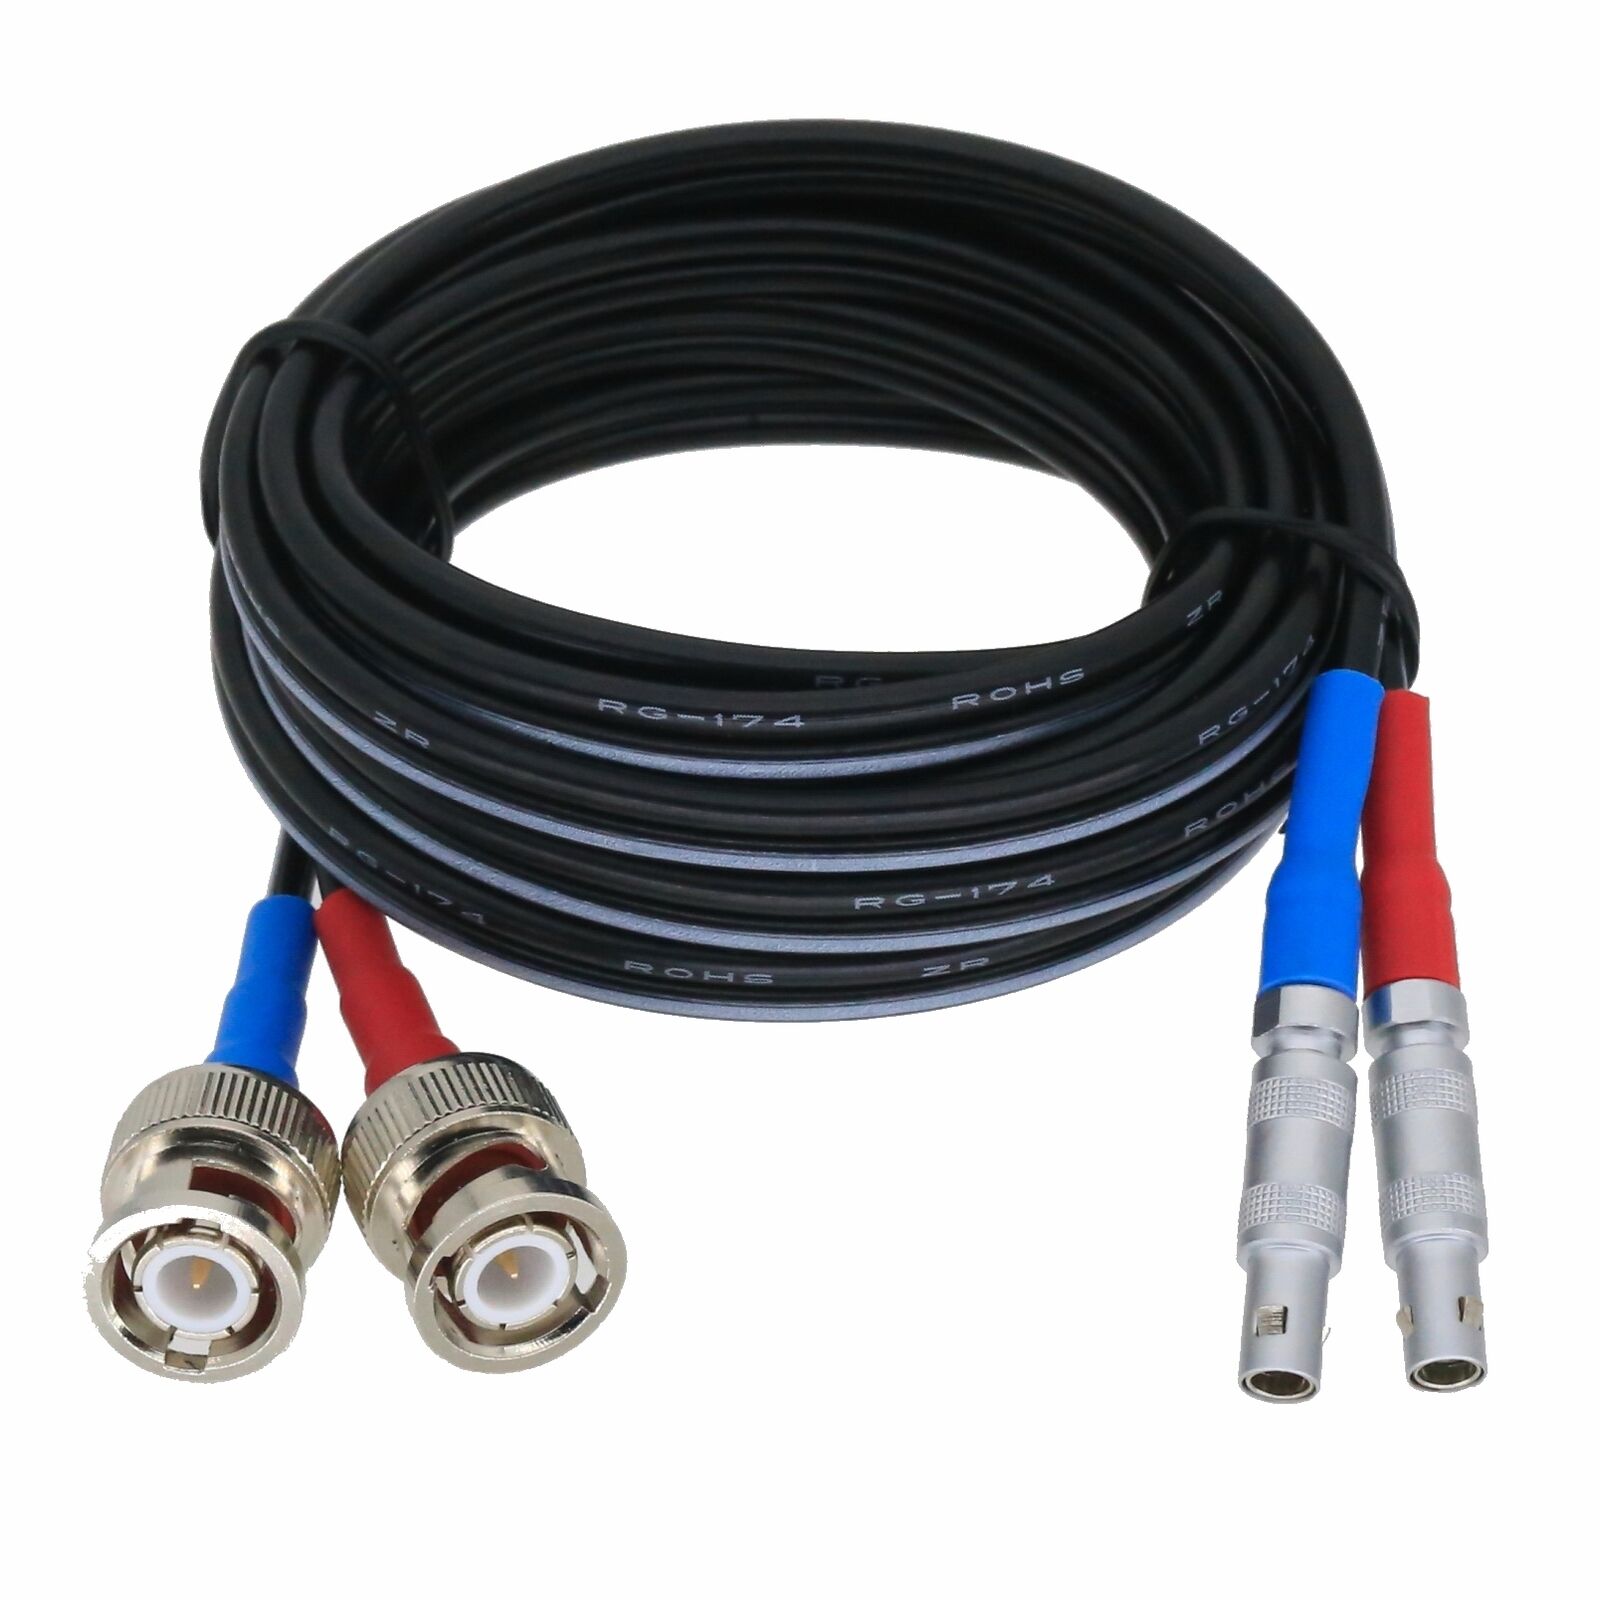 Twinax Rg174 Cable 53~131ft For Ge Panametrics Pt868 Pt878 Handheld Flow Meters